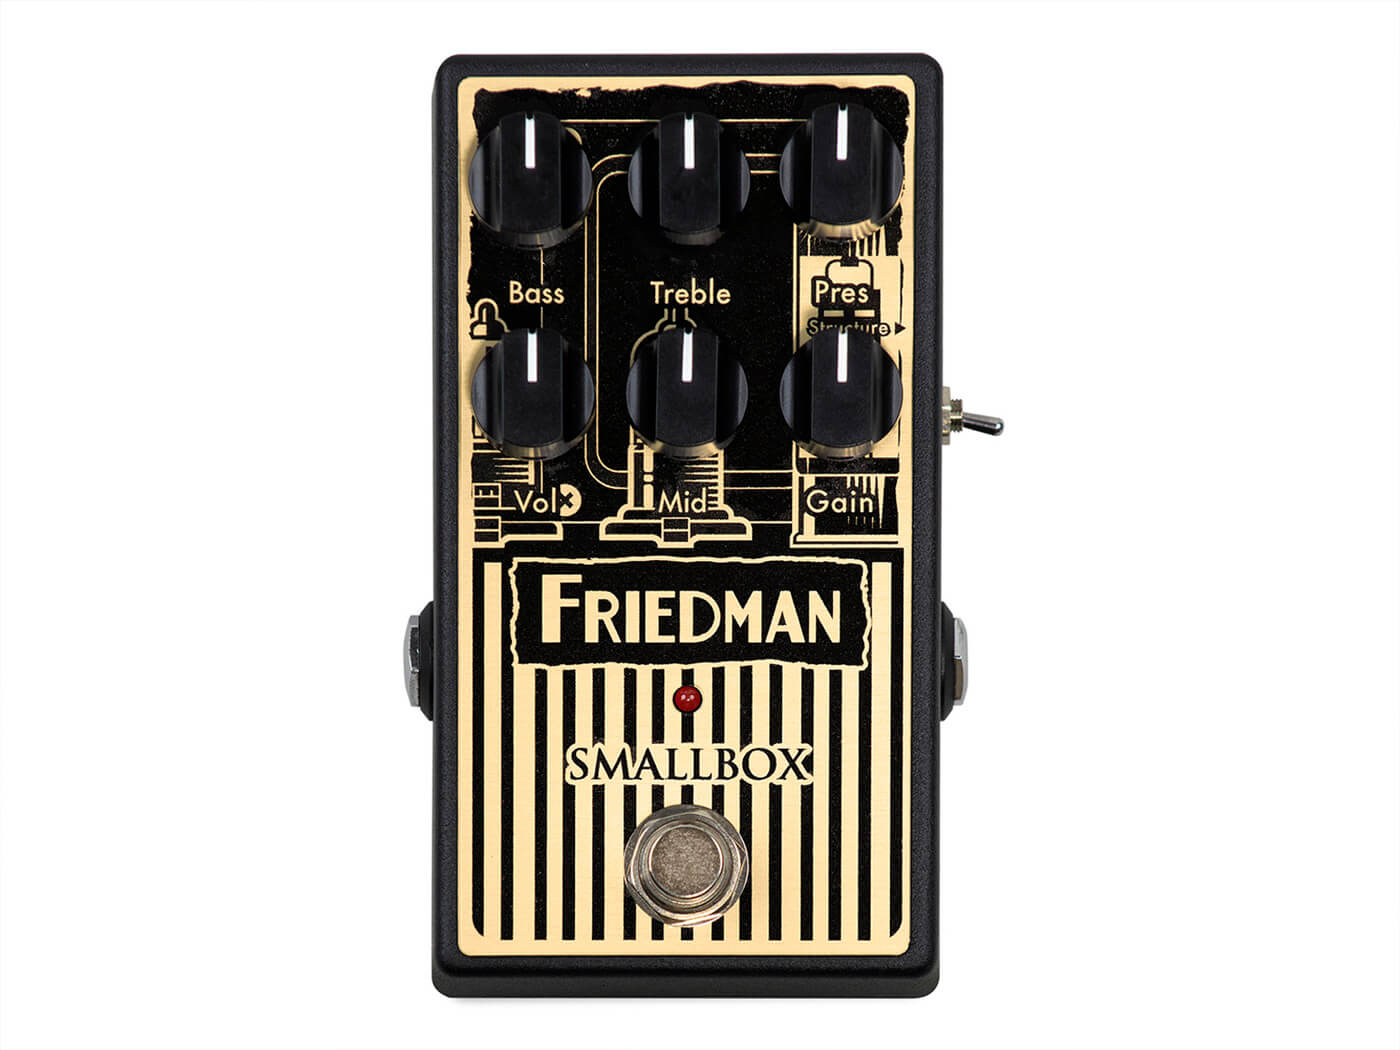 The Friedman Small Box pedal